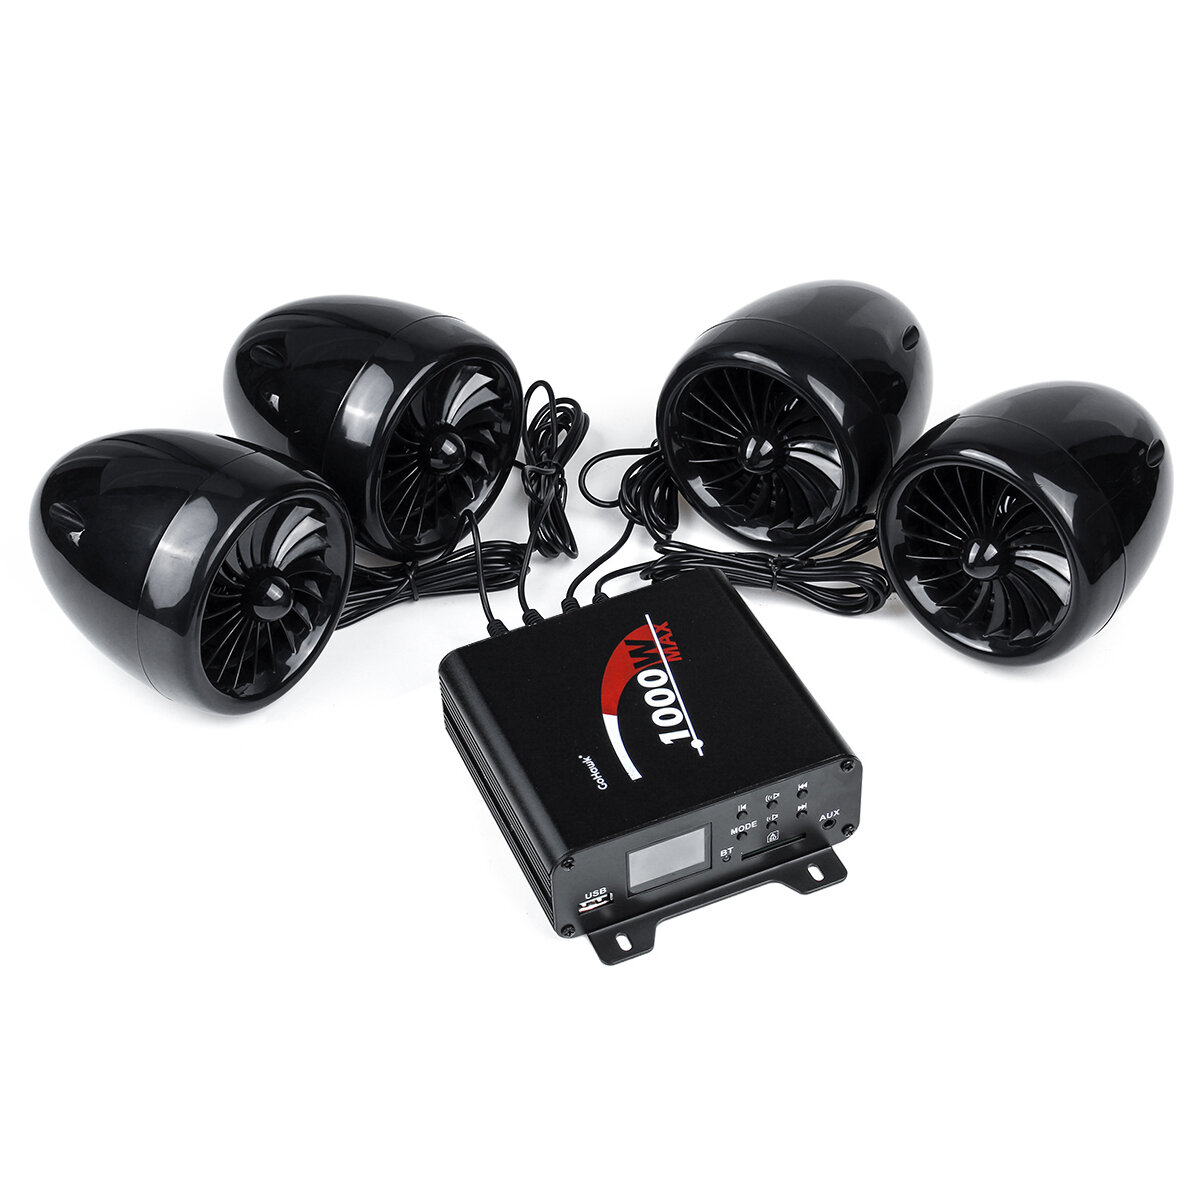 1000W versterker 4 luidsprekers waterdicht bluetooth stereo audiosysteem voor ATV UTV motorfiets ele